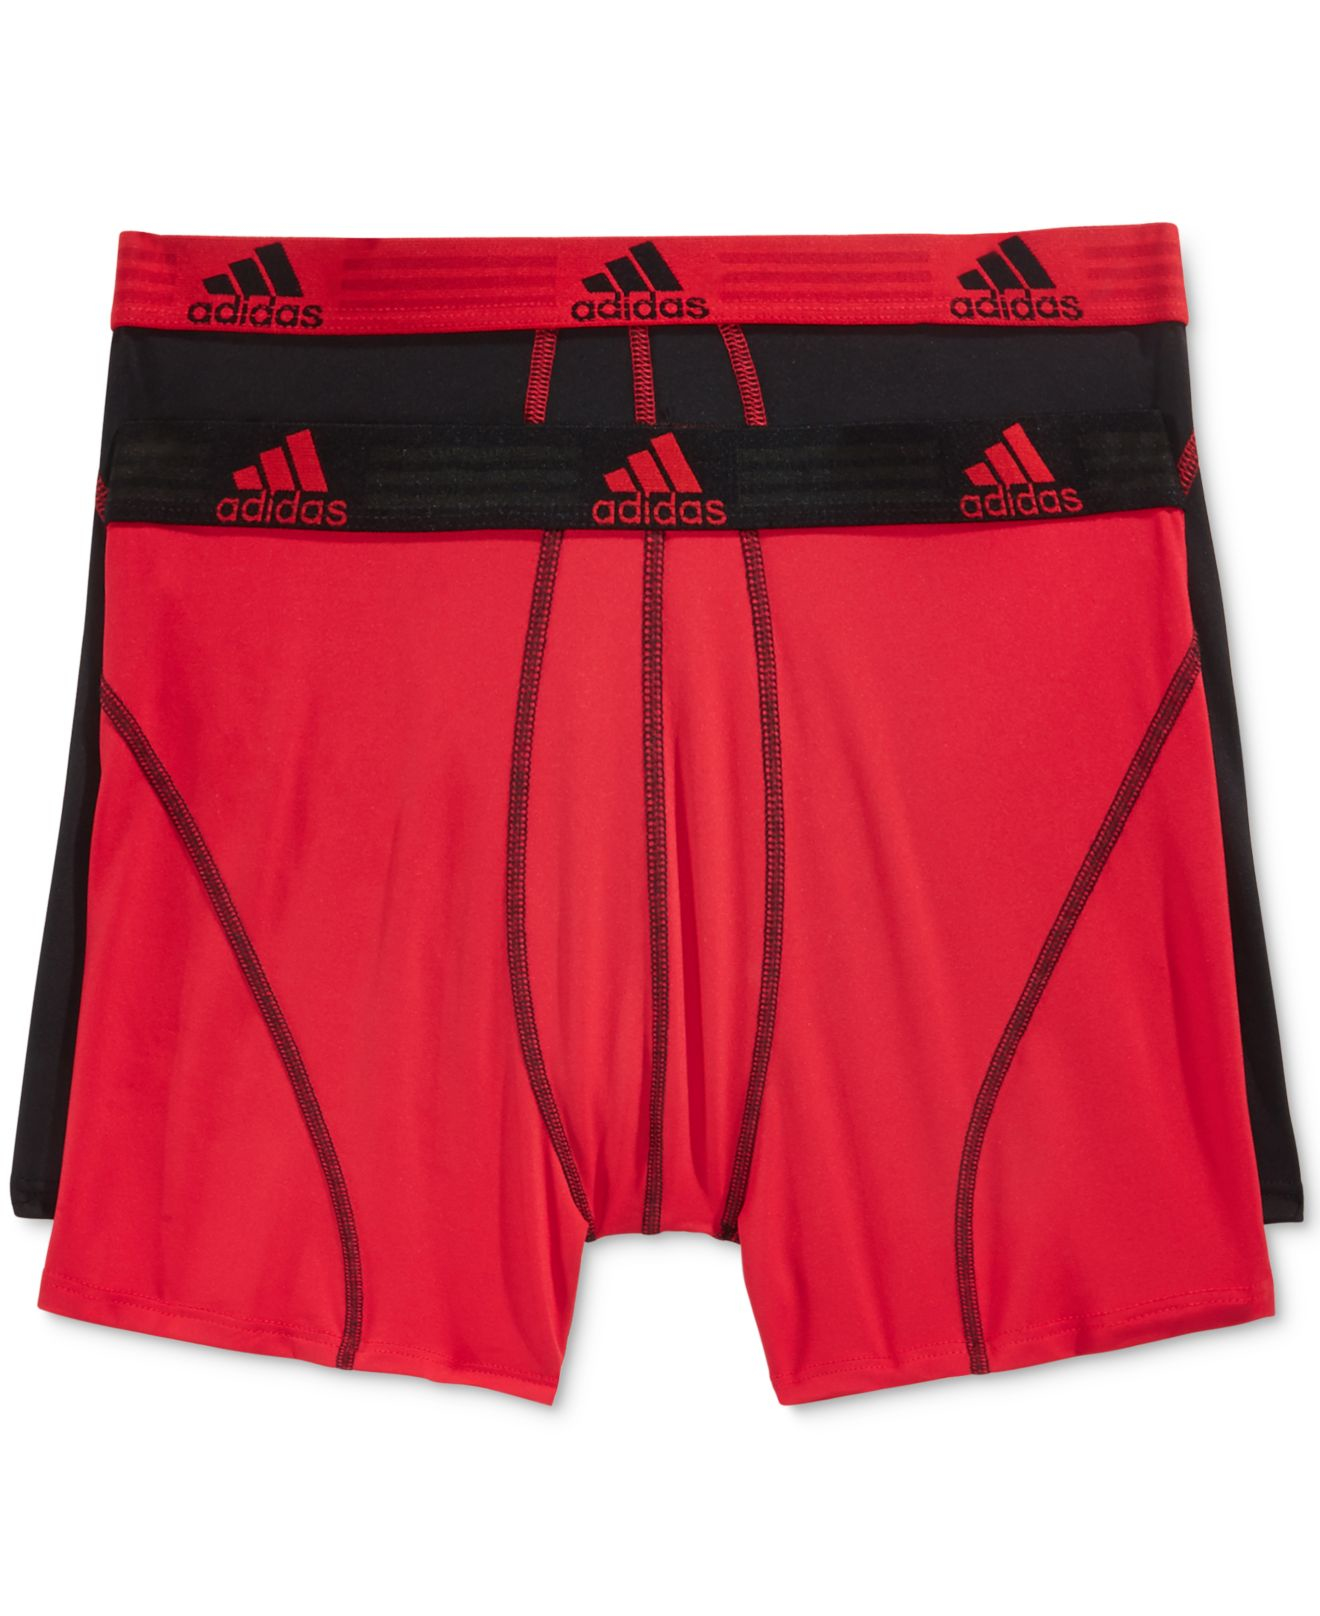 Adidas originals Men's 2-pk. Climalite Performance Boxer Briefs in Red ...